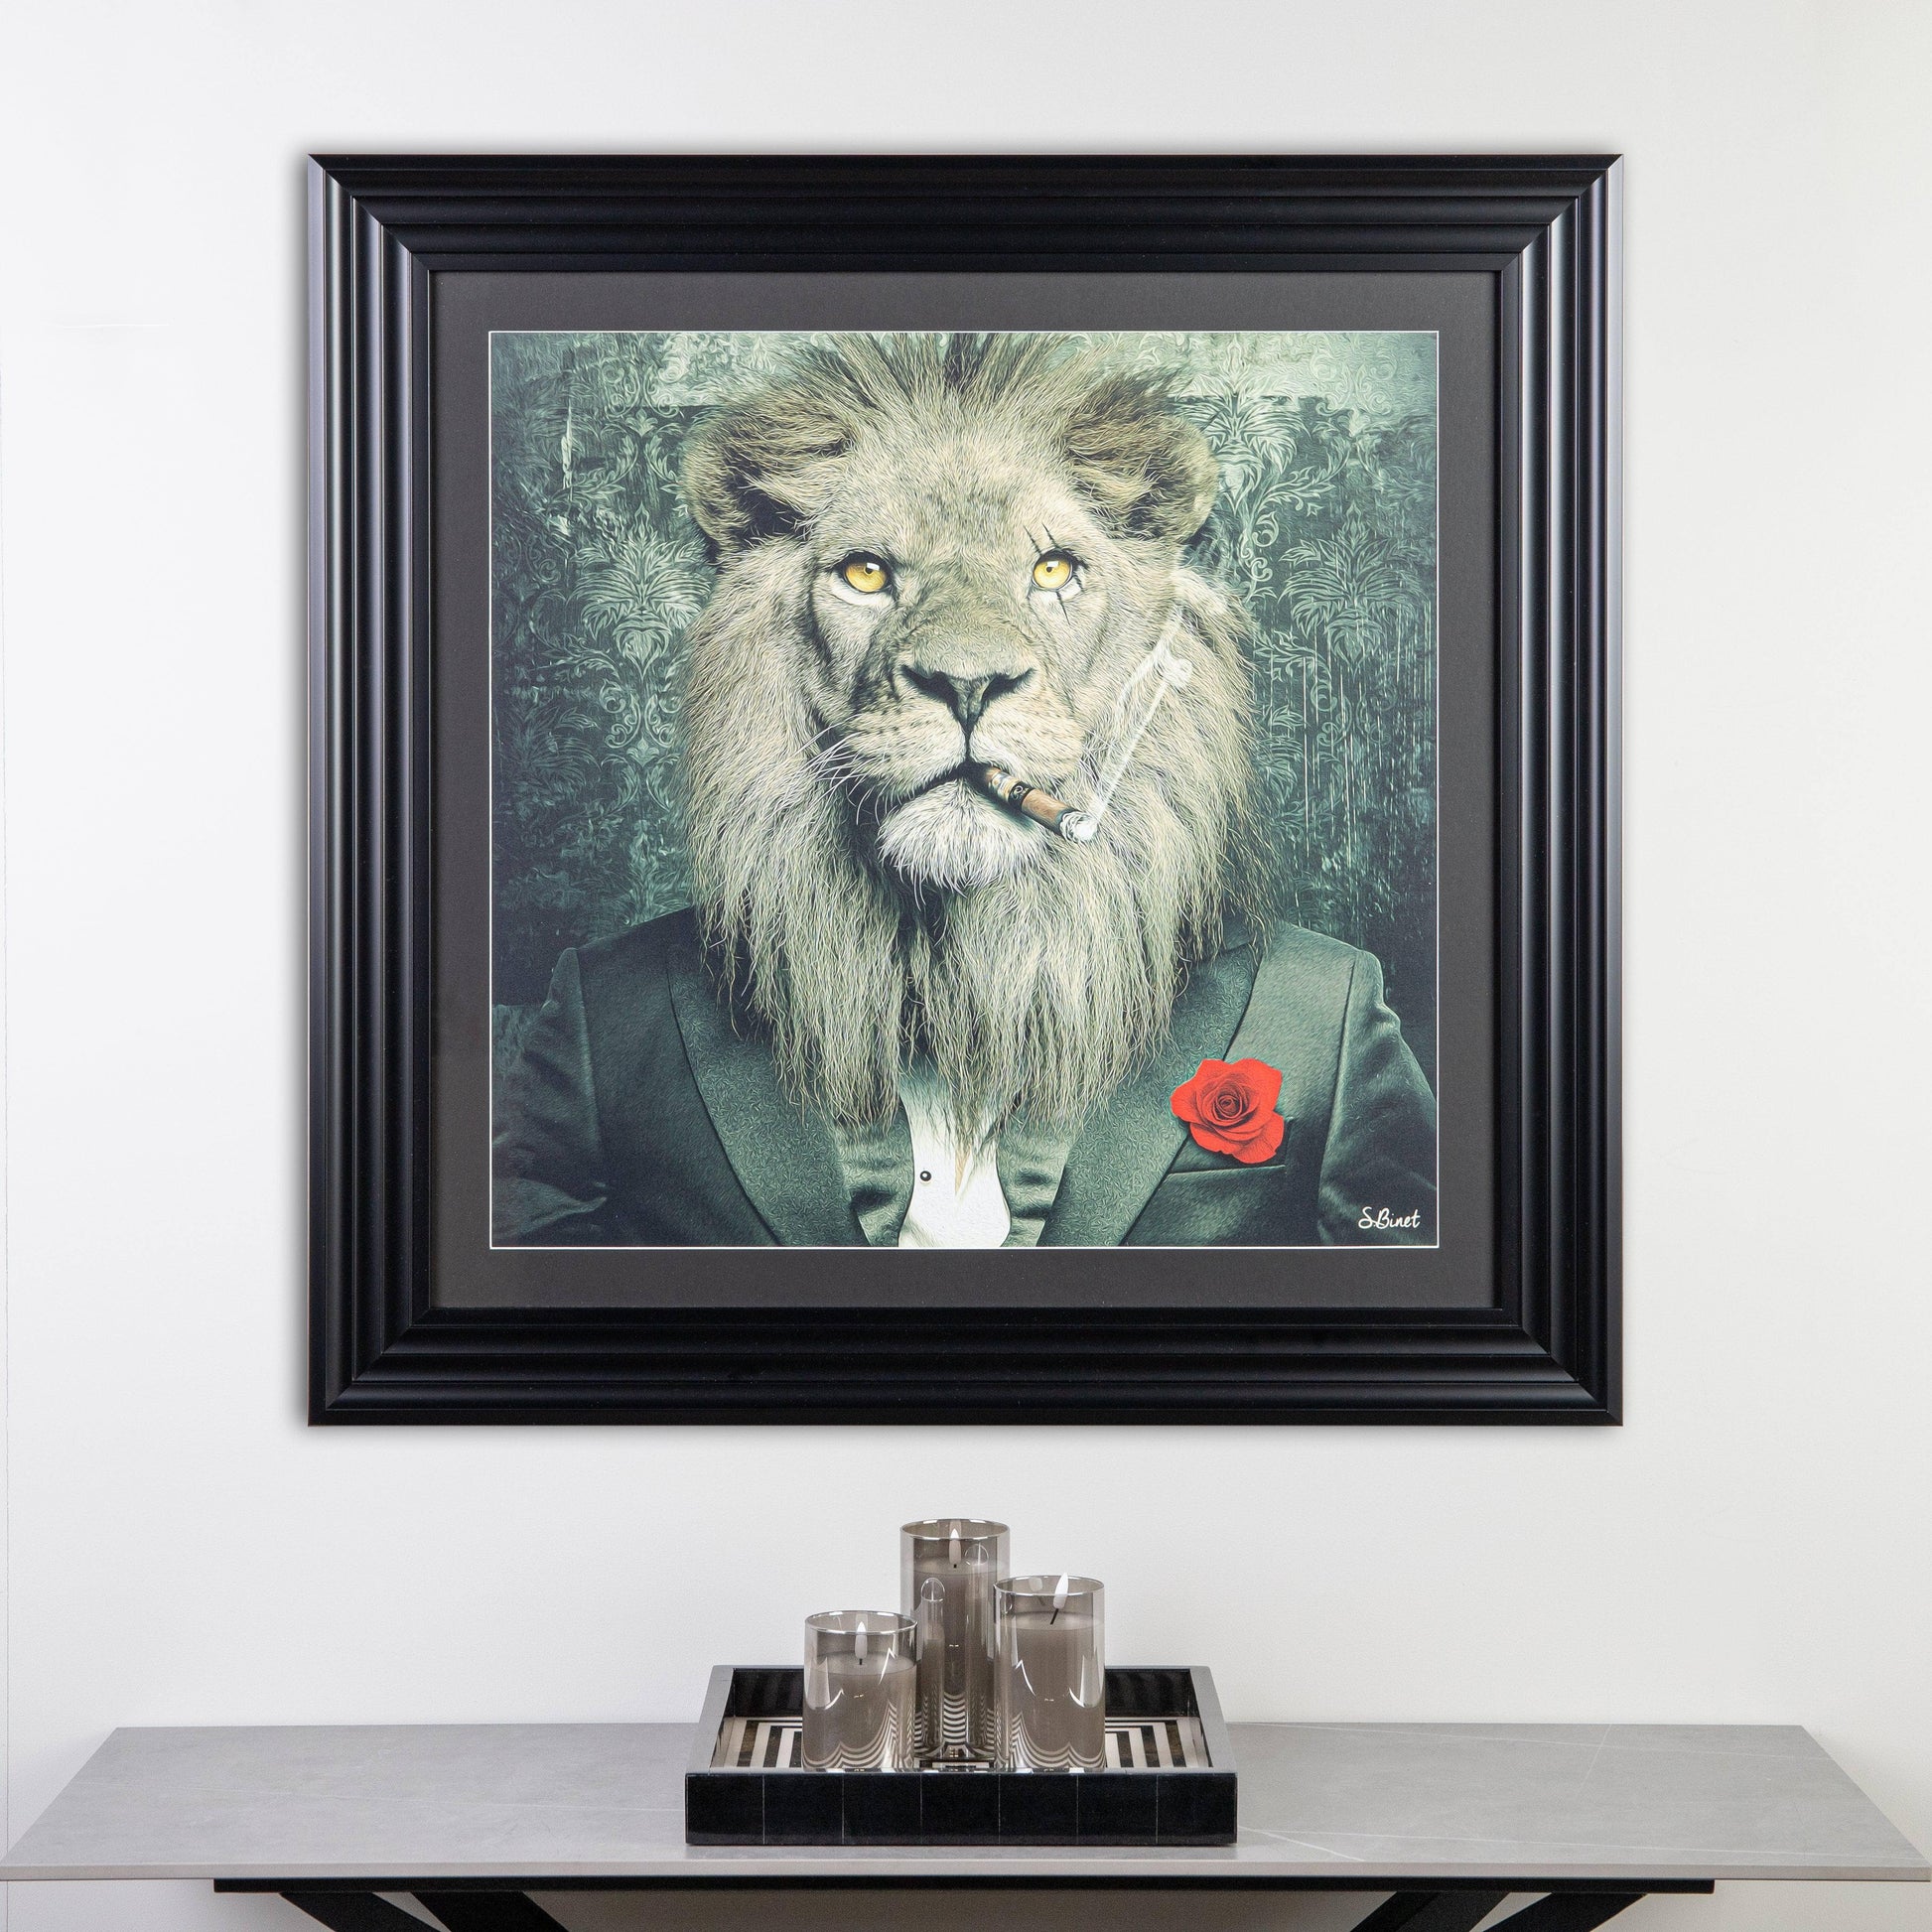 Pictures  -  Shh Lion Mafia Framed Wall Art by Sylvain Binet 90cm x 90cm  -  60003238